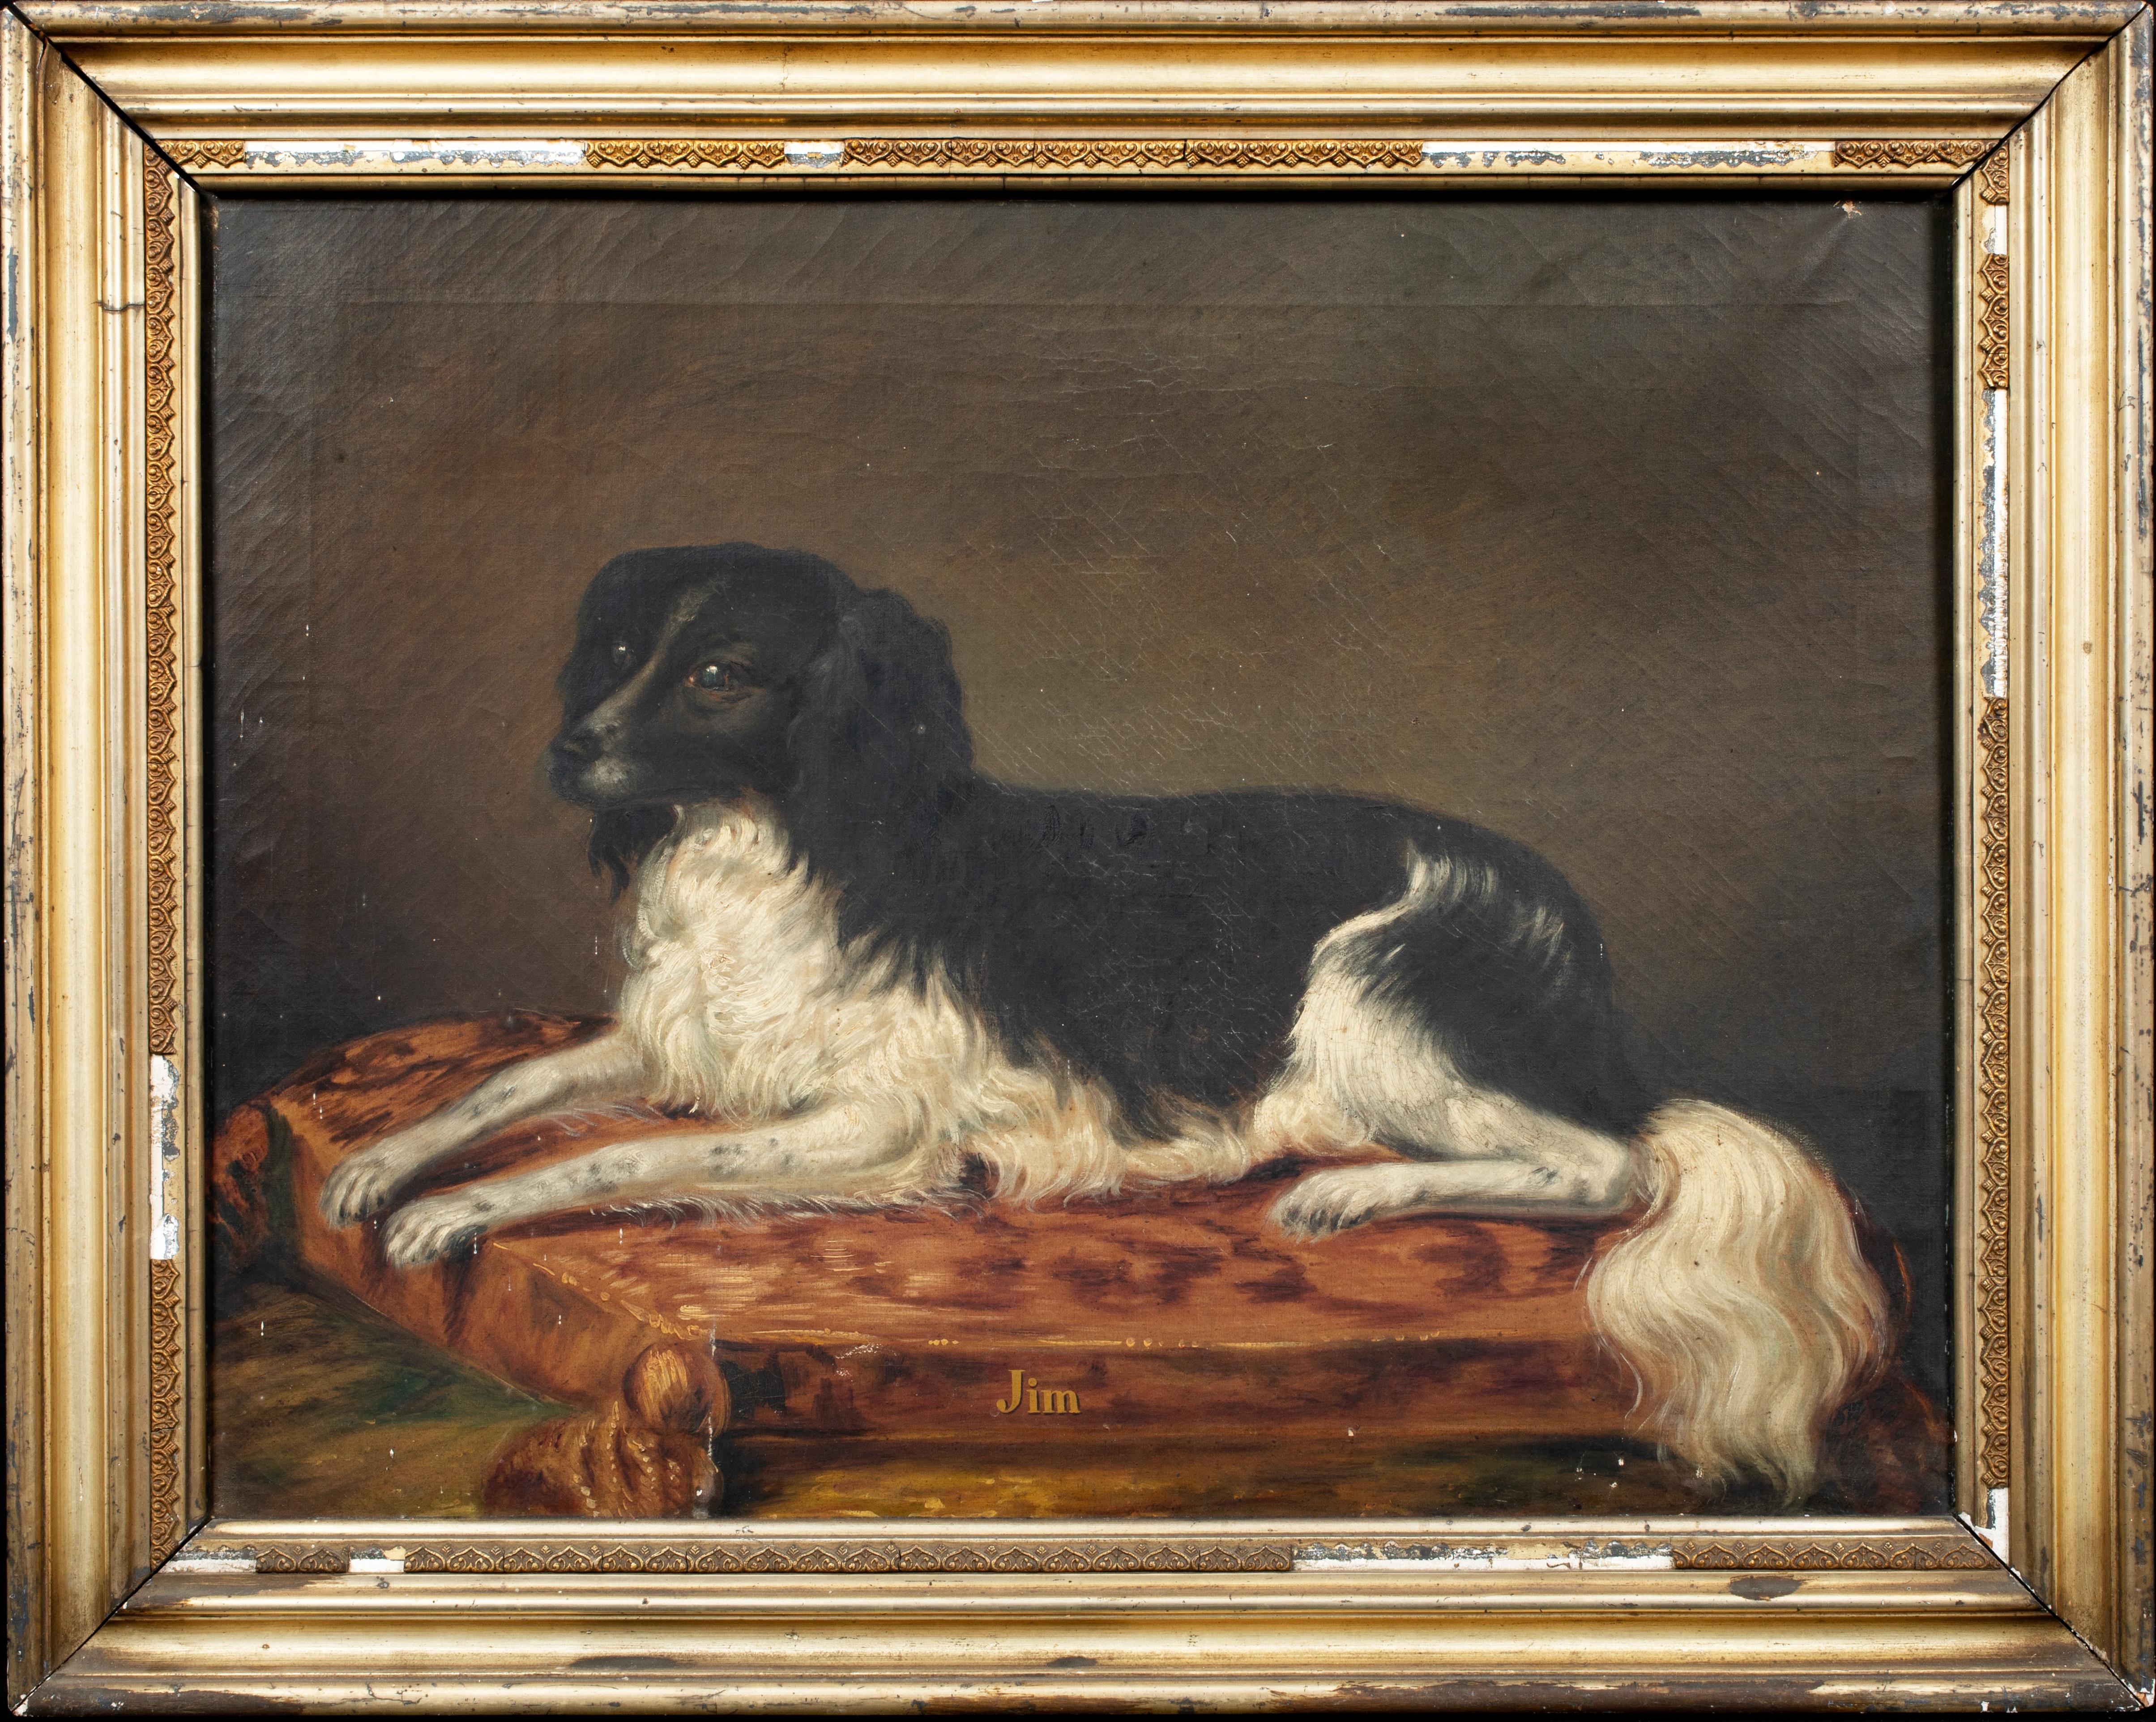 Unknown Portrait Painting - Portrait Of A "Jim", a Black & White Spaniel, circa 1800